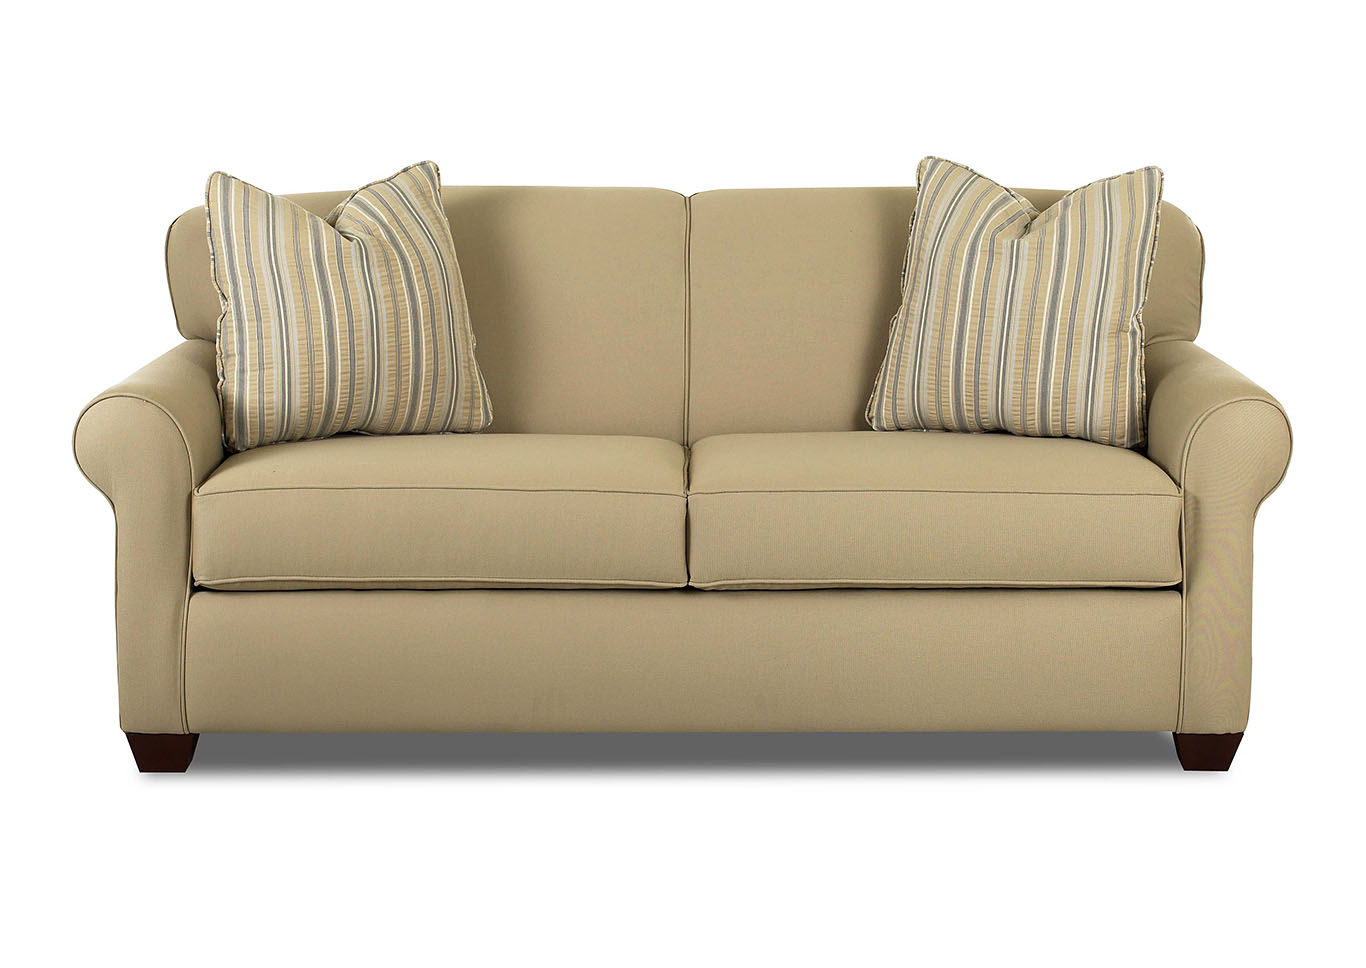 Mayhew Beige Stationary Fabric Sofa,Klaussner Home Furnishings